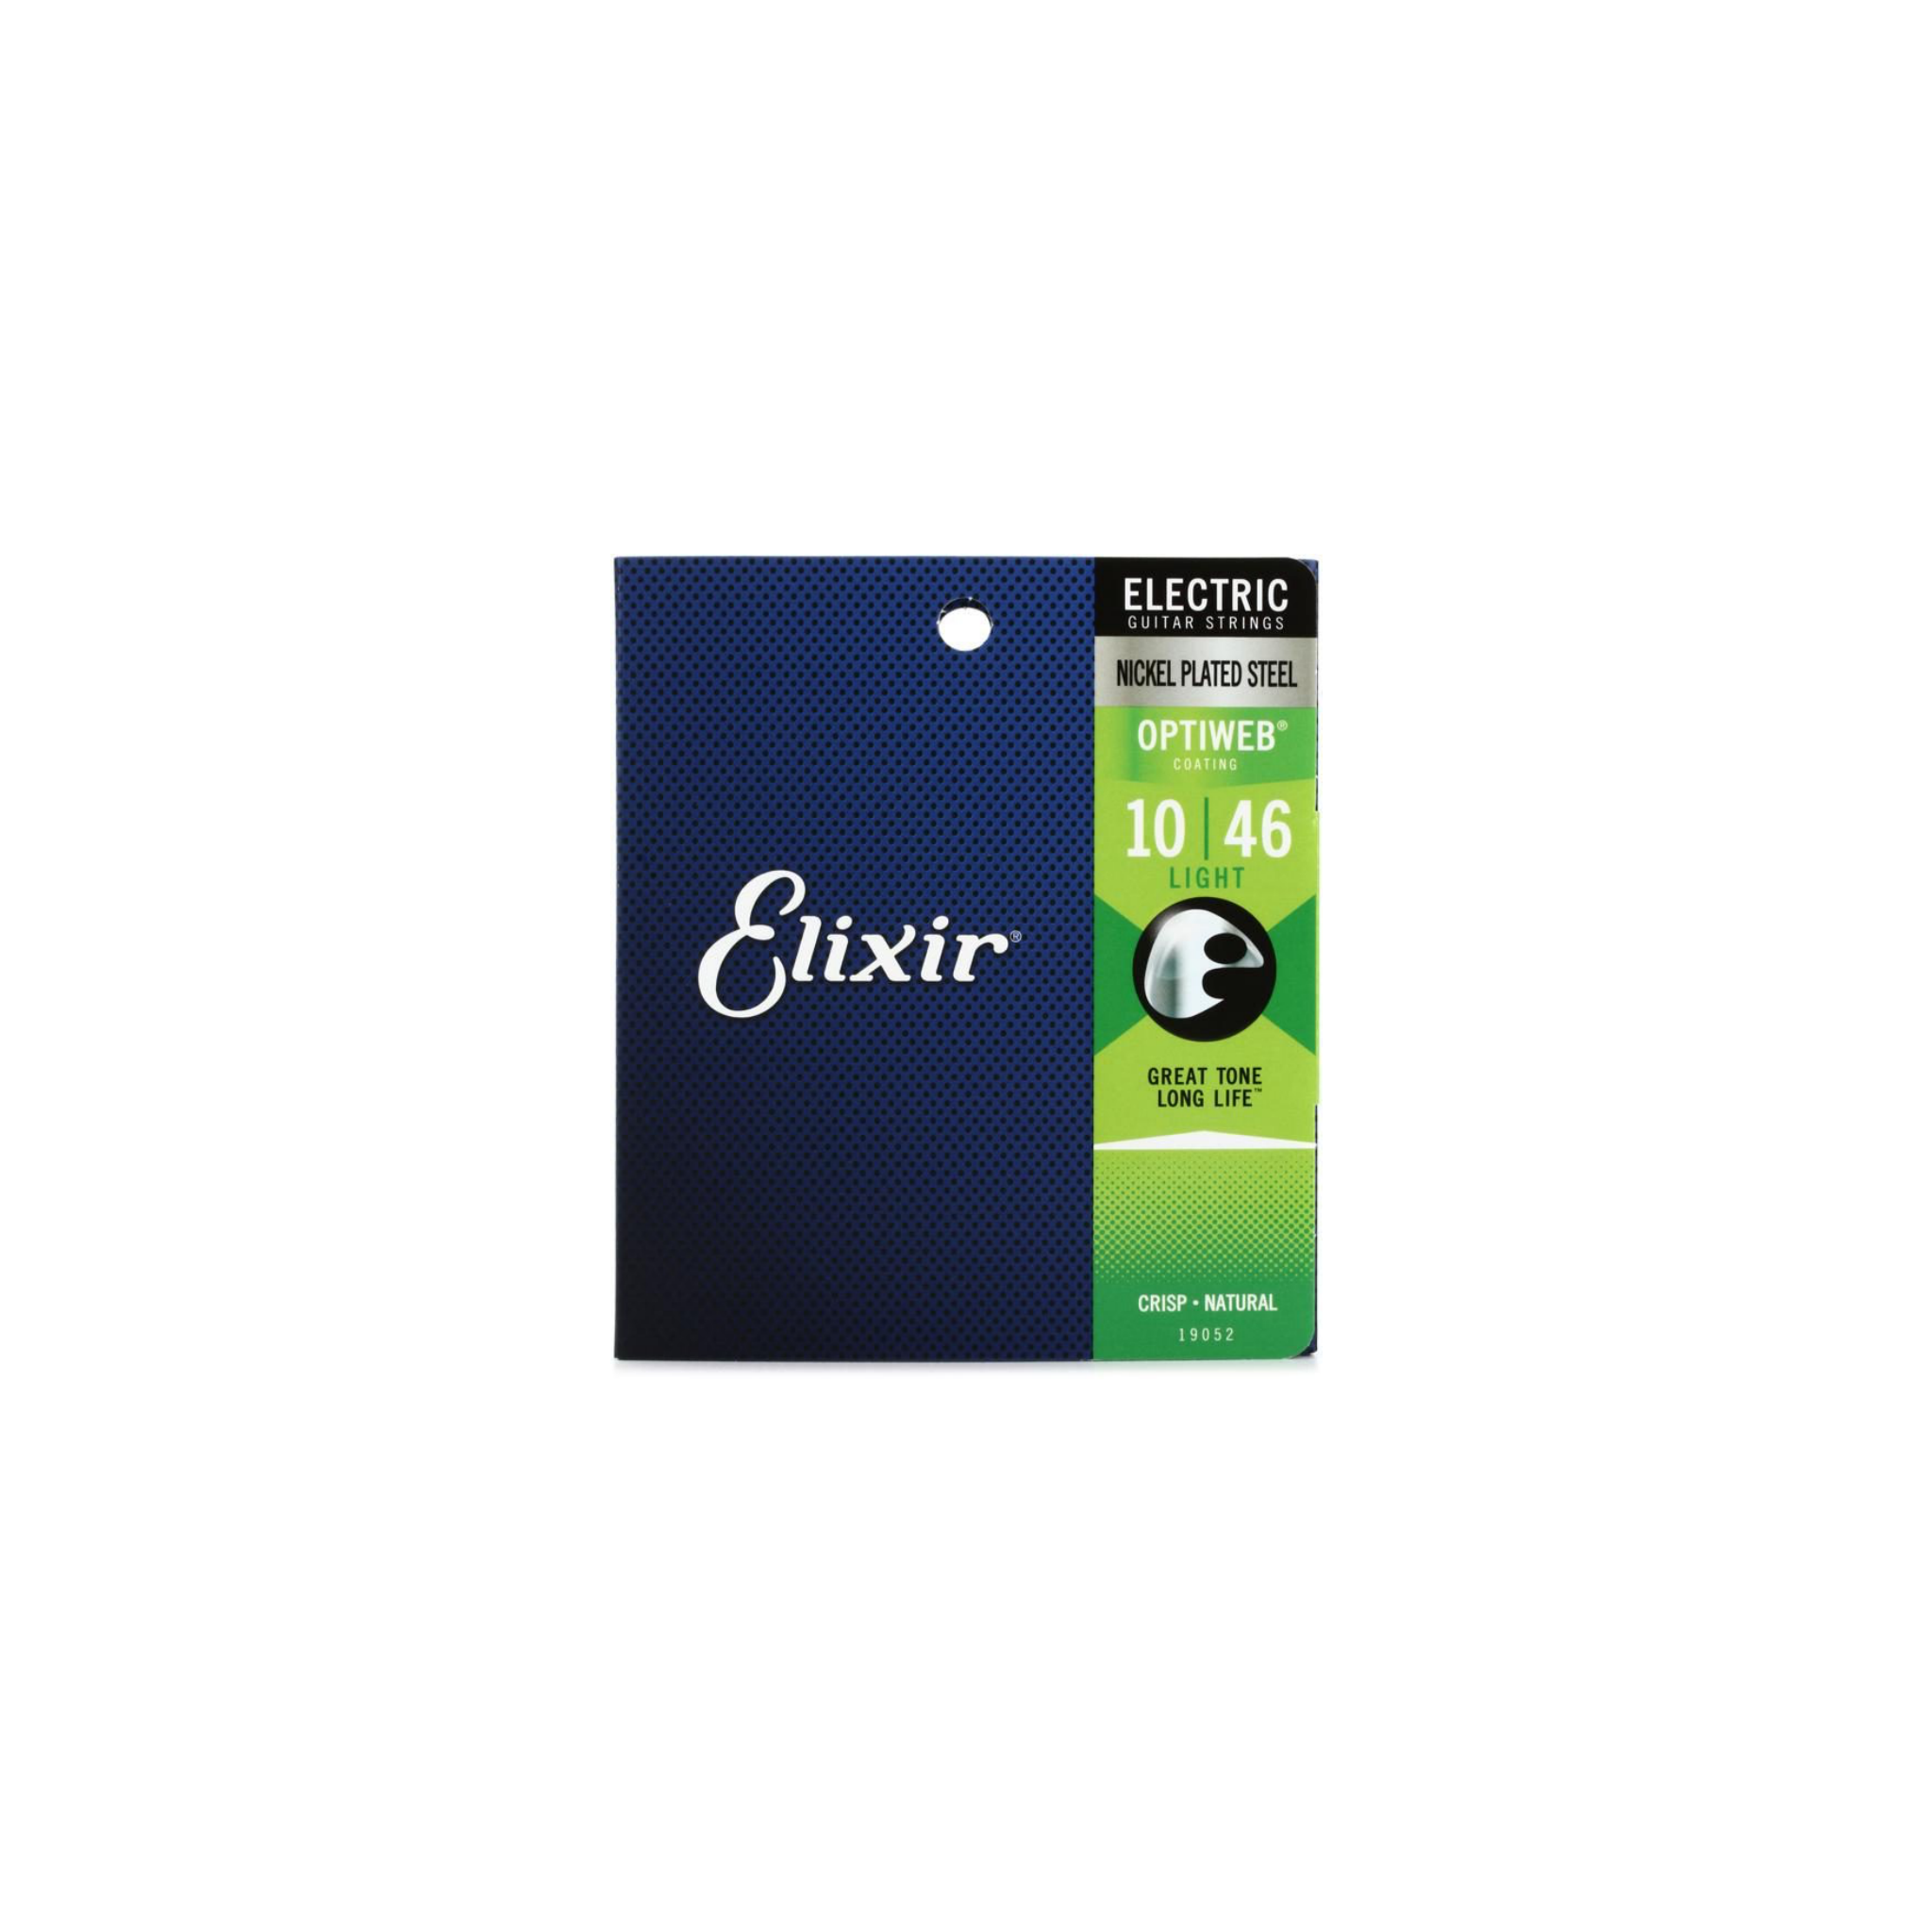 Elixir 10-46 Electric Optiweb Light